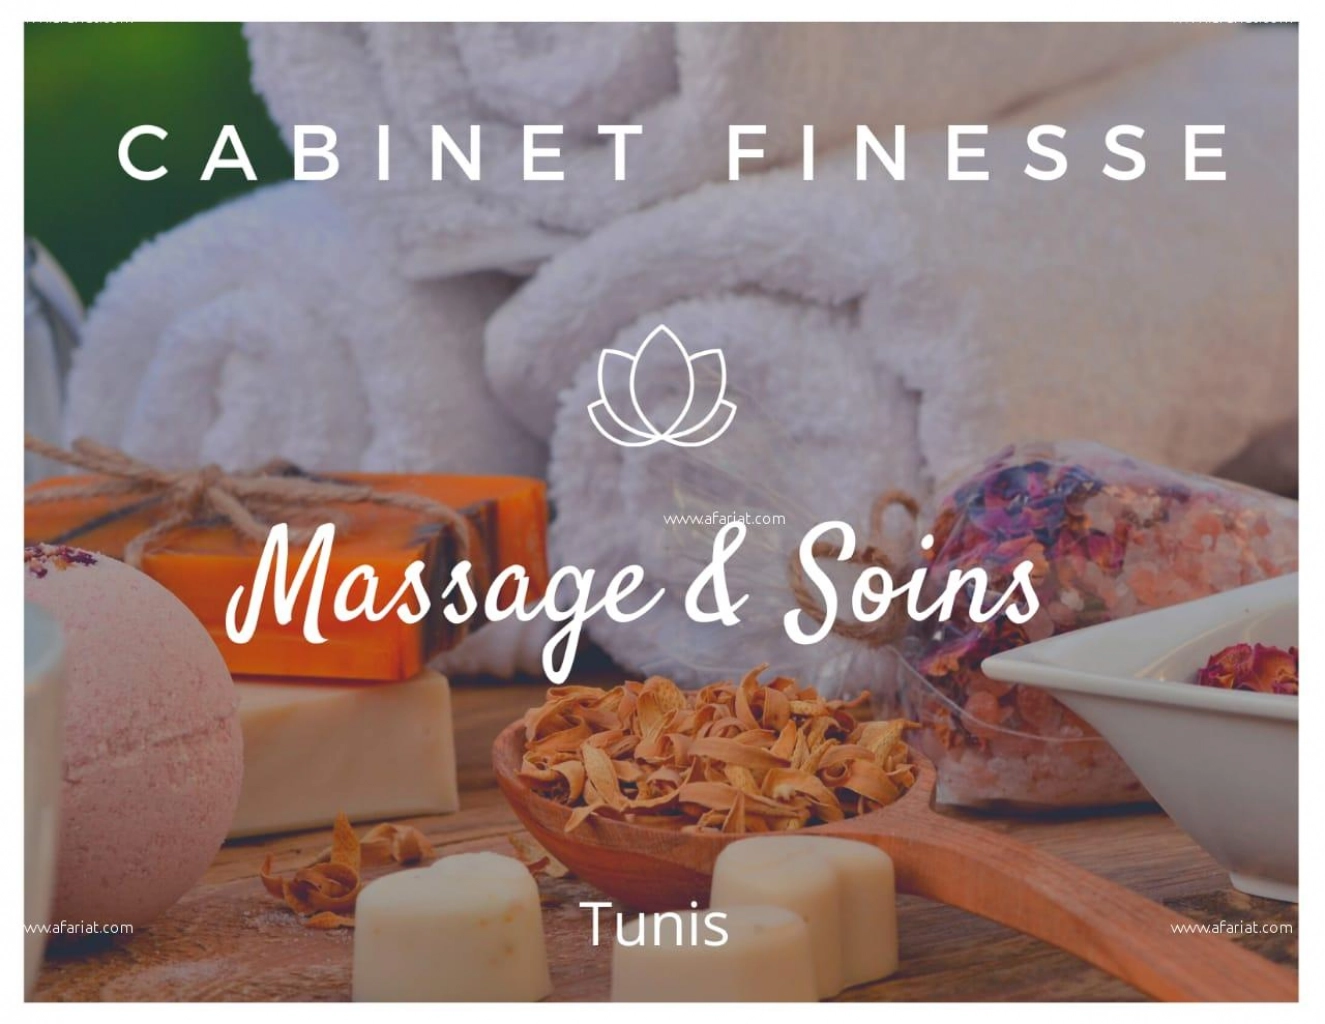 CABINET FINESSE Massage & Soins